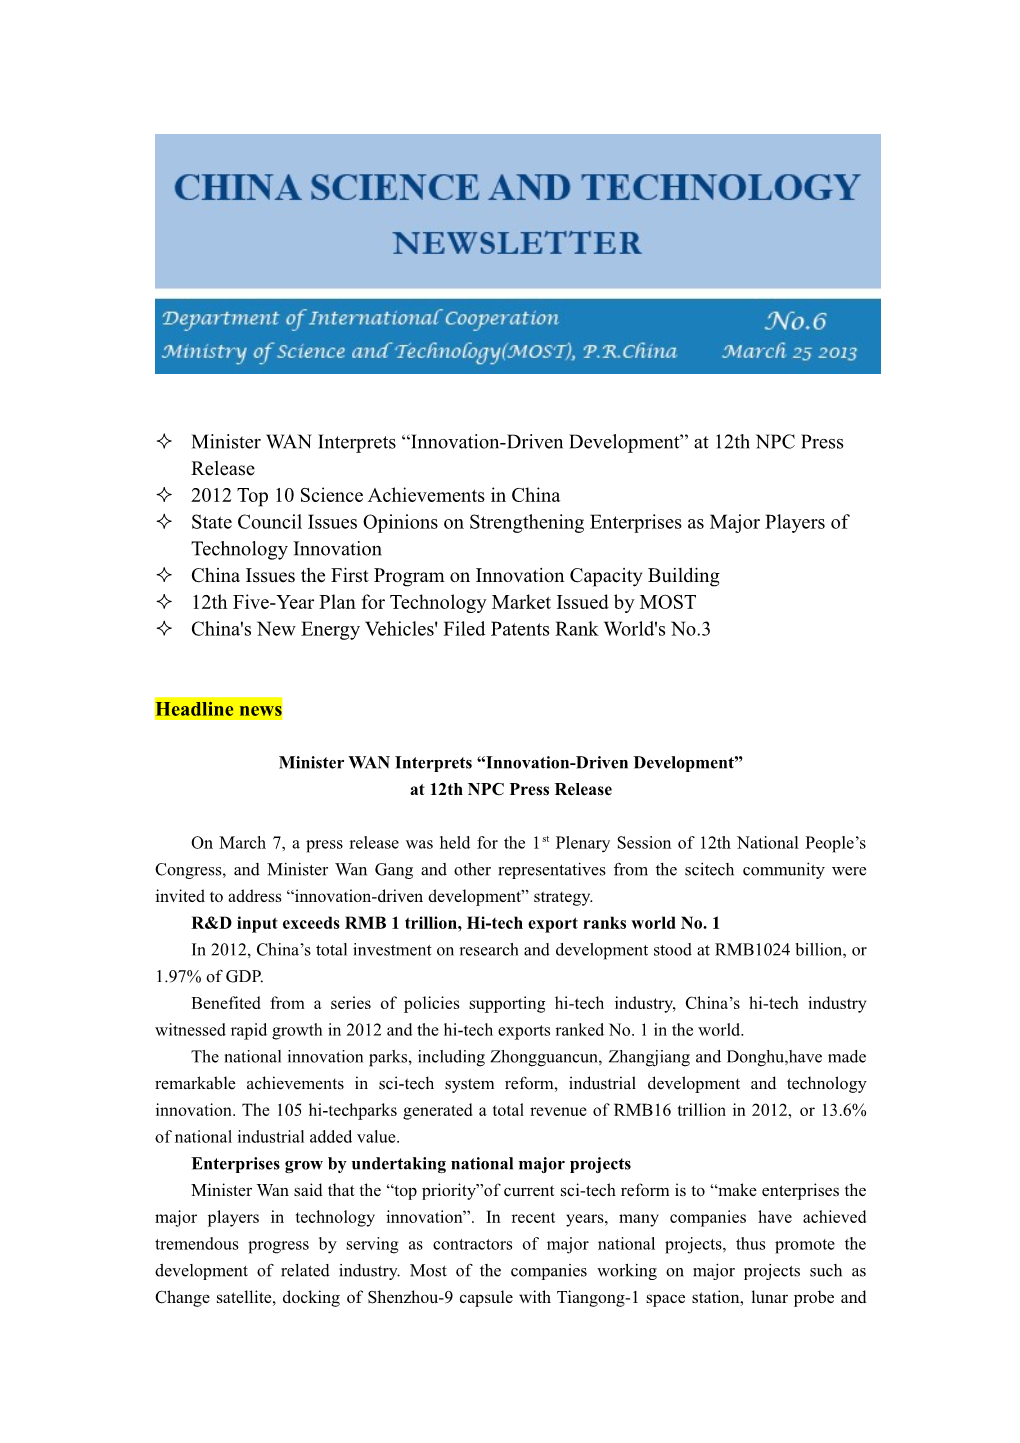 Minister WAN Interprets Innovation-Driven Development at 12Th NPC Press Release